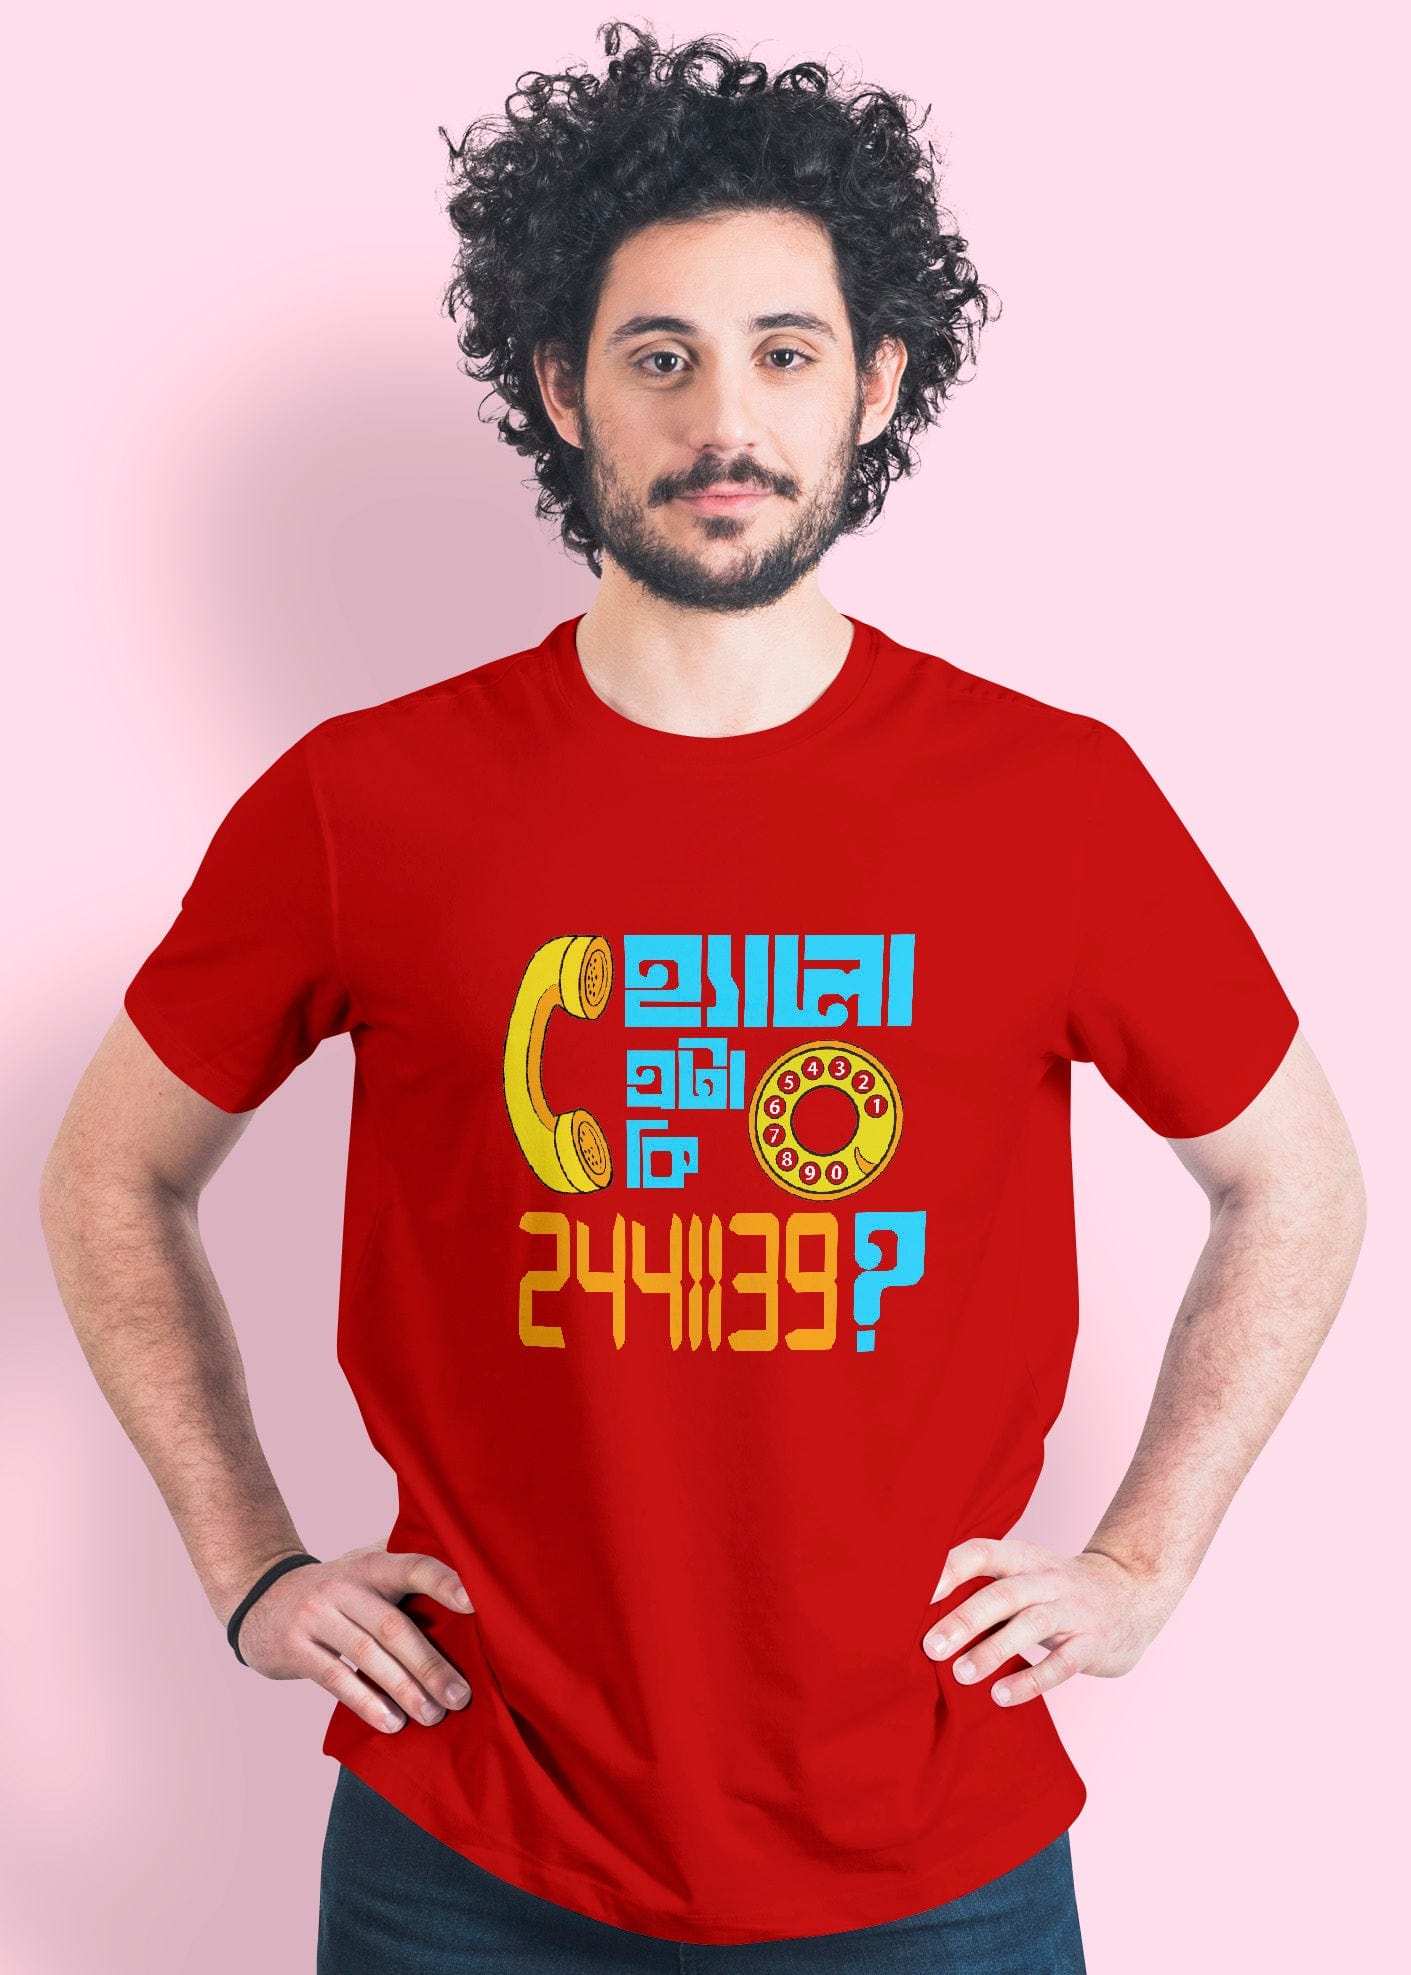 Eta ki 2441139 Printed Half Sleeve Premium Cotton T-shirt For Men